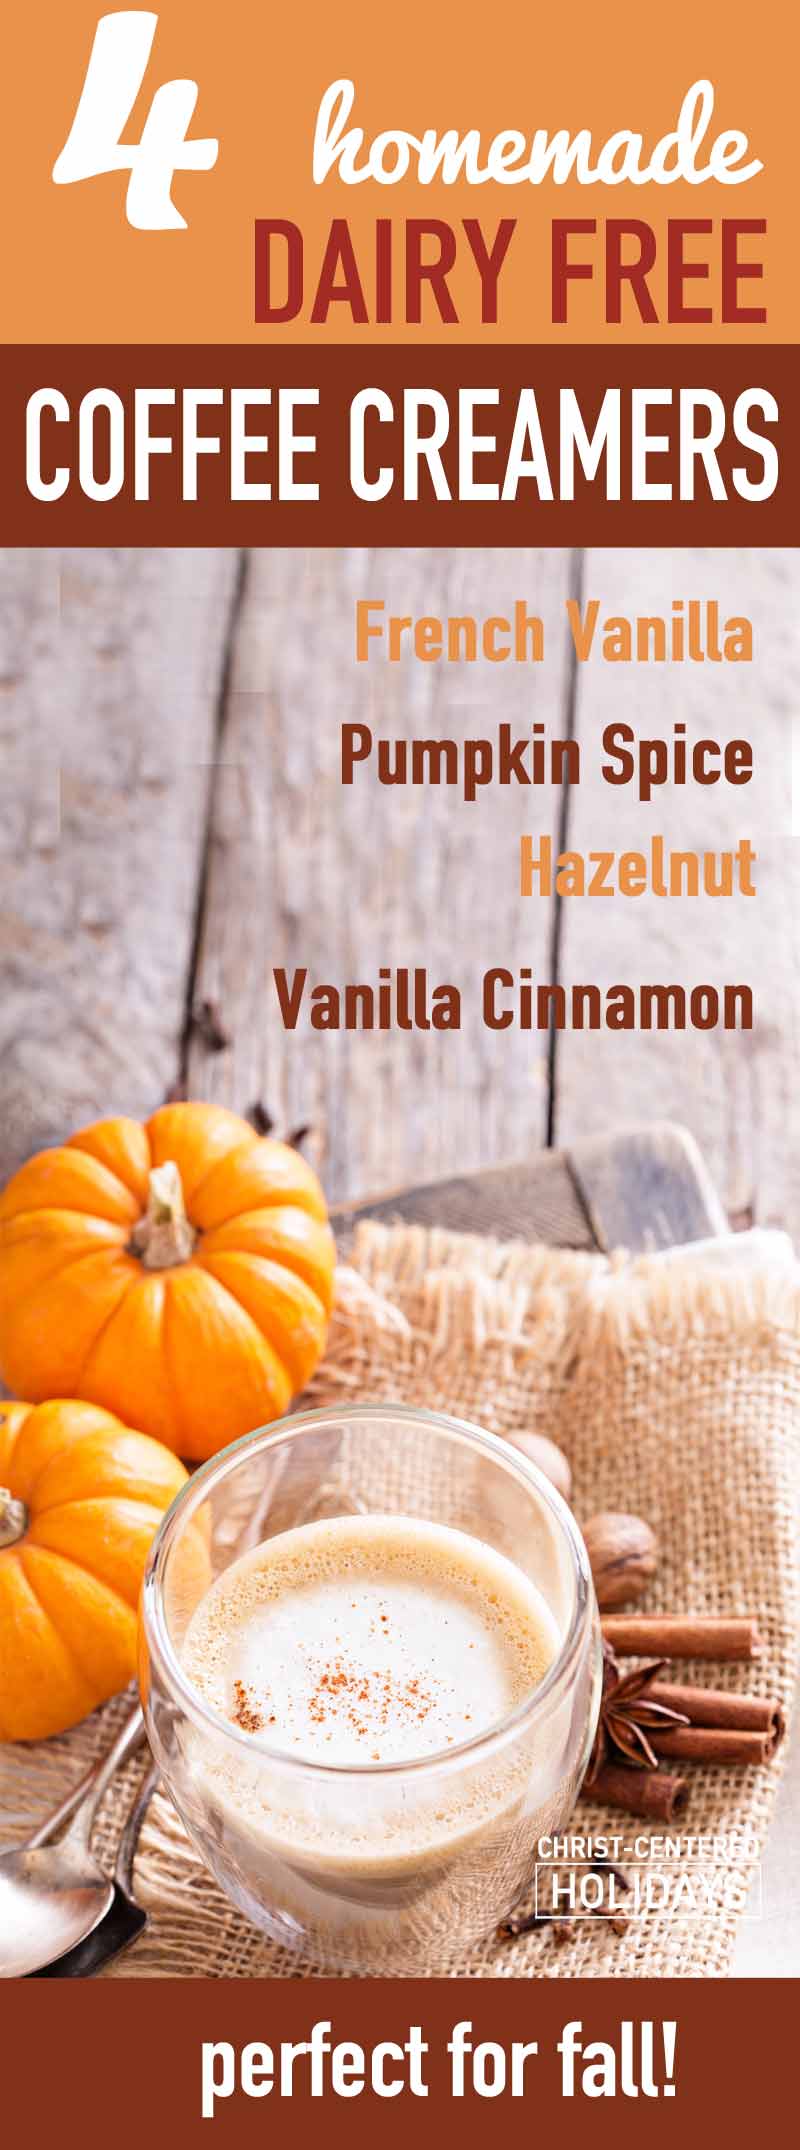 Coffee Creamer Recipes for Fall